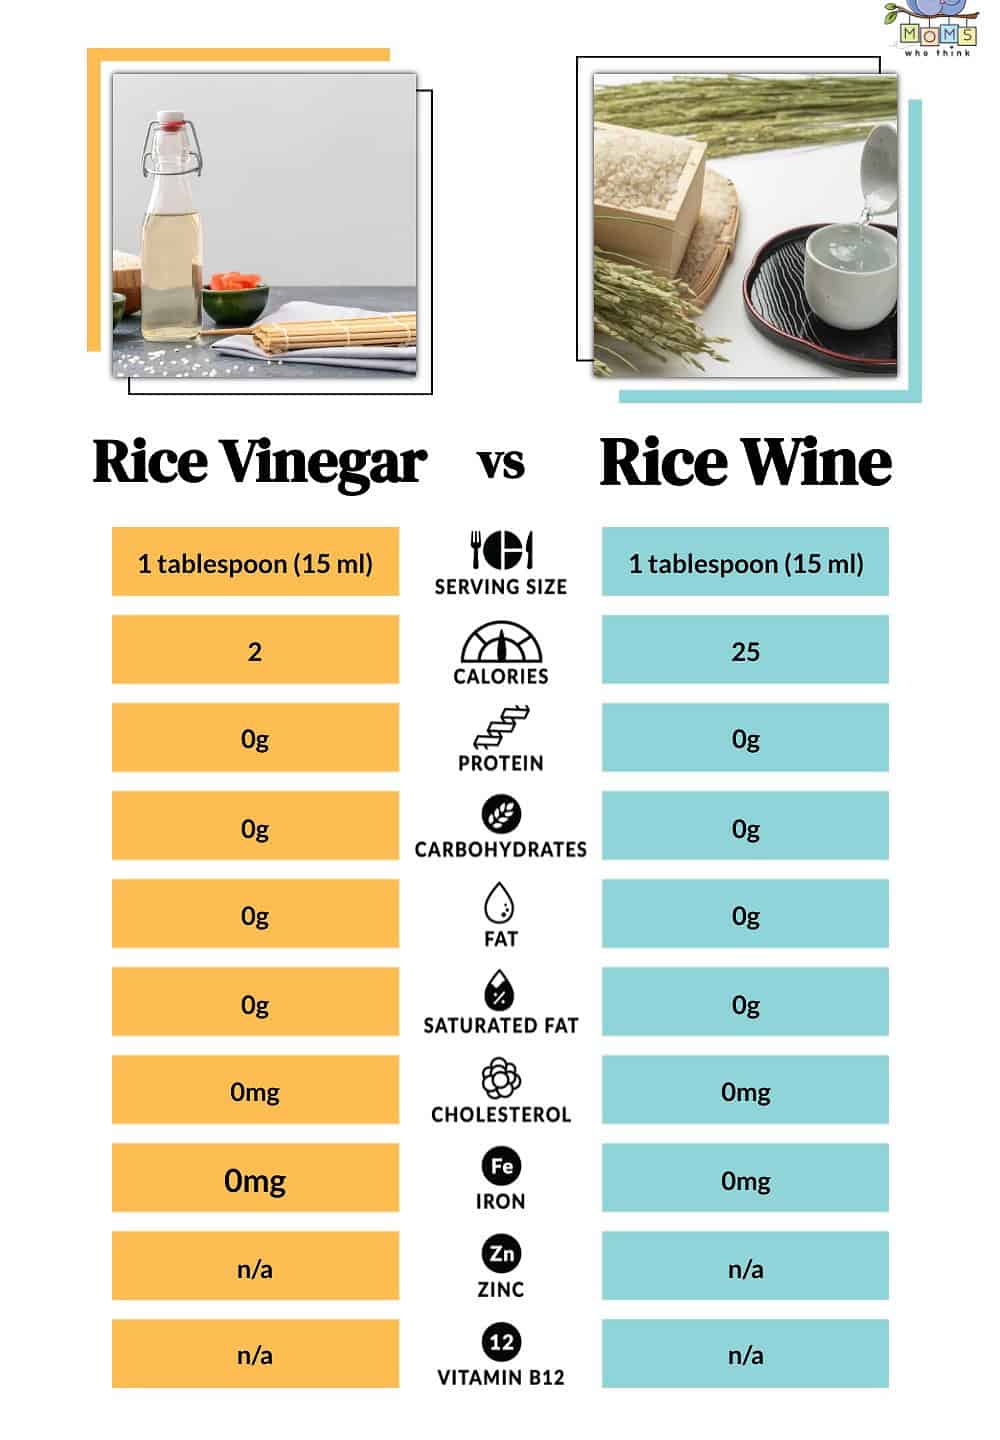 Rice Vinegar vs Rice Wine Nutritional Facts